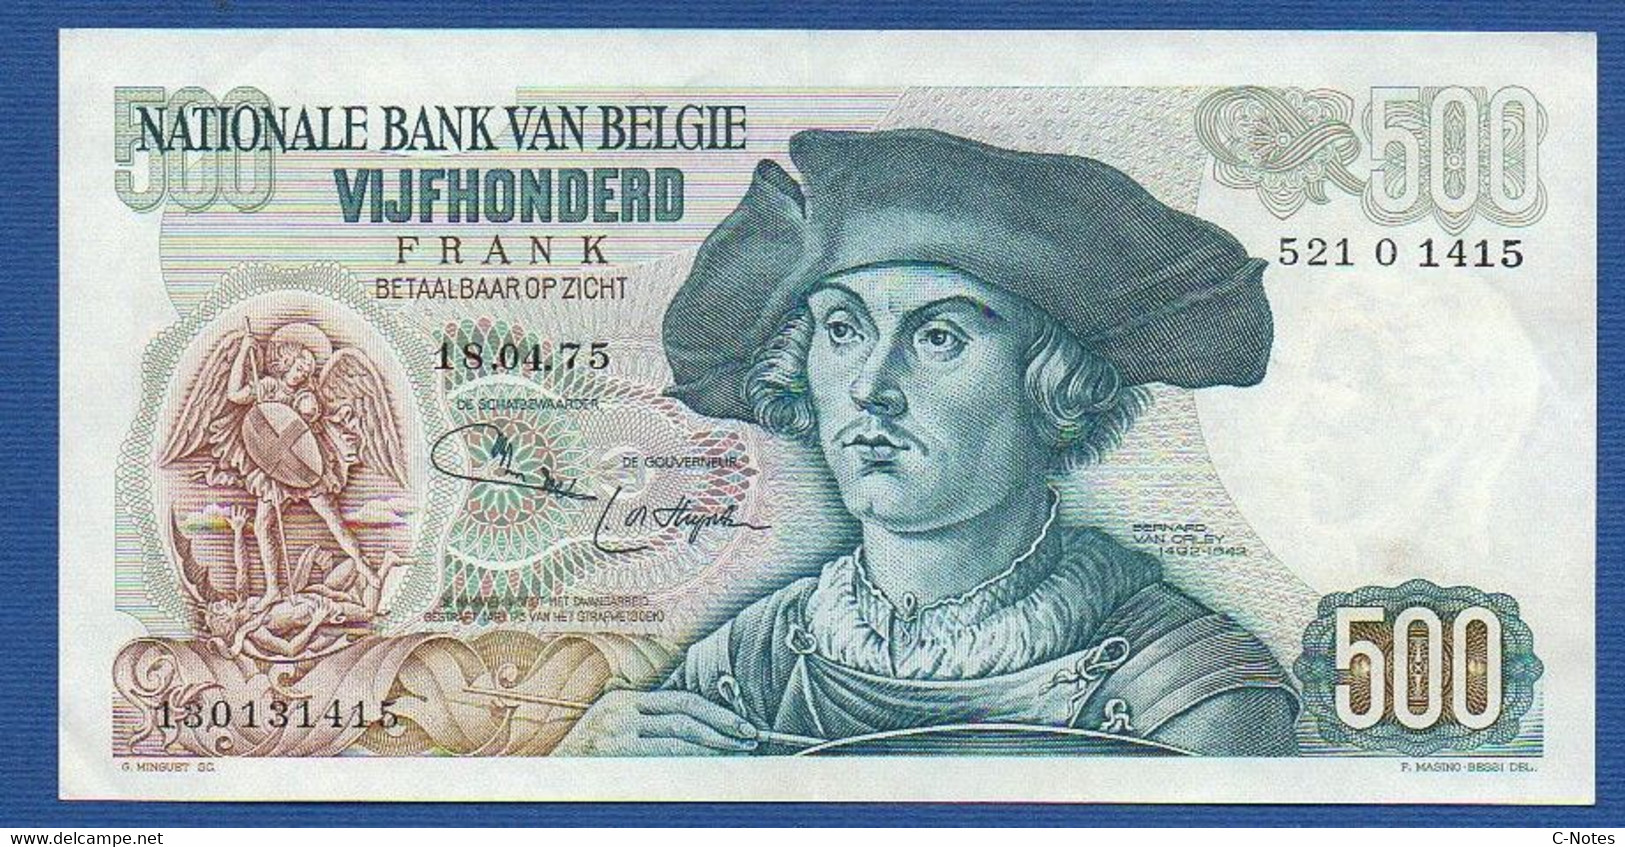 BELGIUM - P.135b(3) - 500 Francs 18.01.1975 XF/AU, Serie 521 O 1415 - 500 Francs